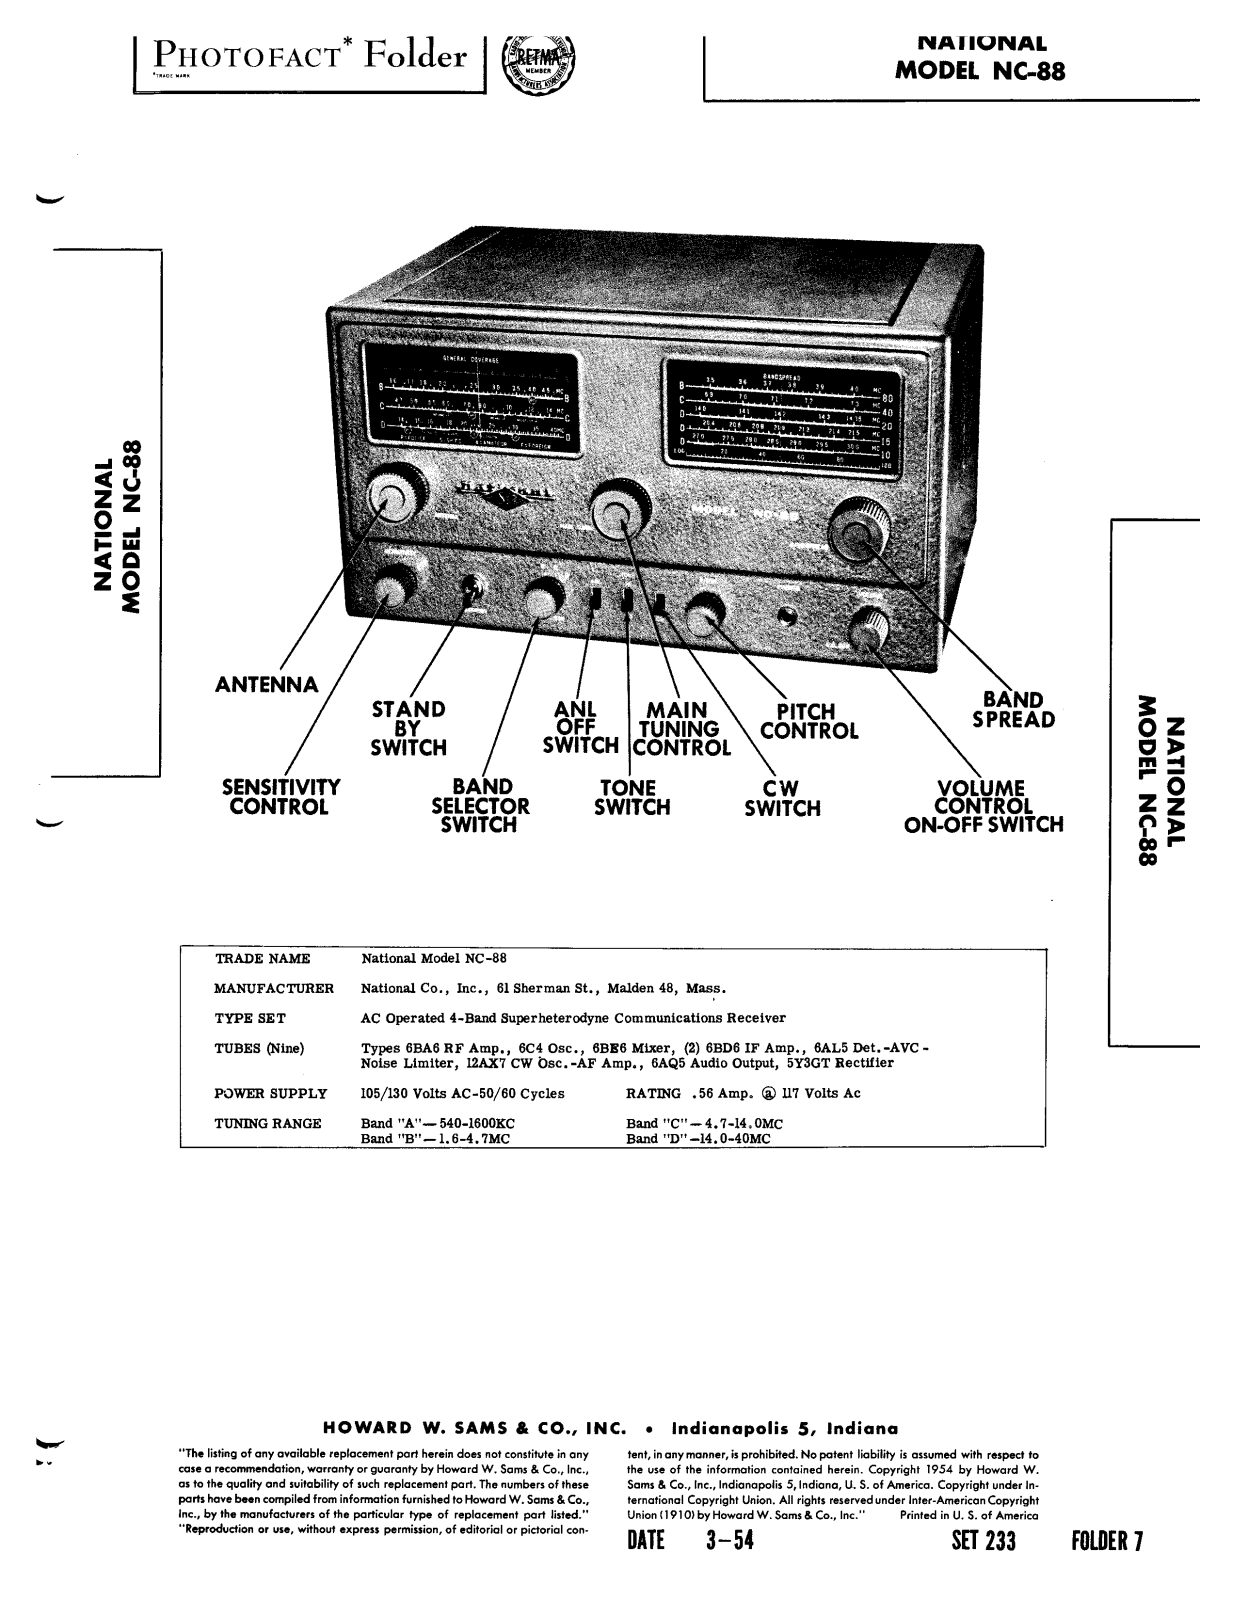 NATIONAL RADIO NC-88 User Manual